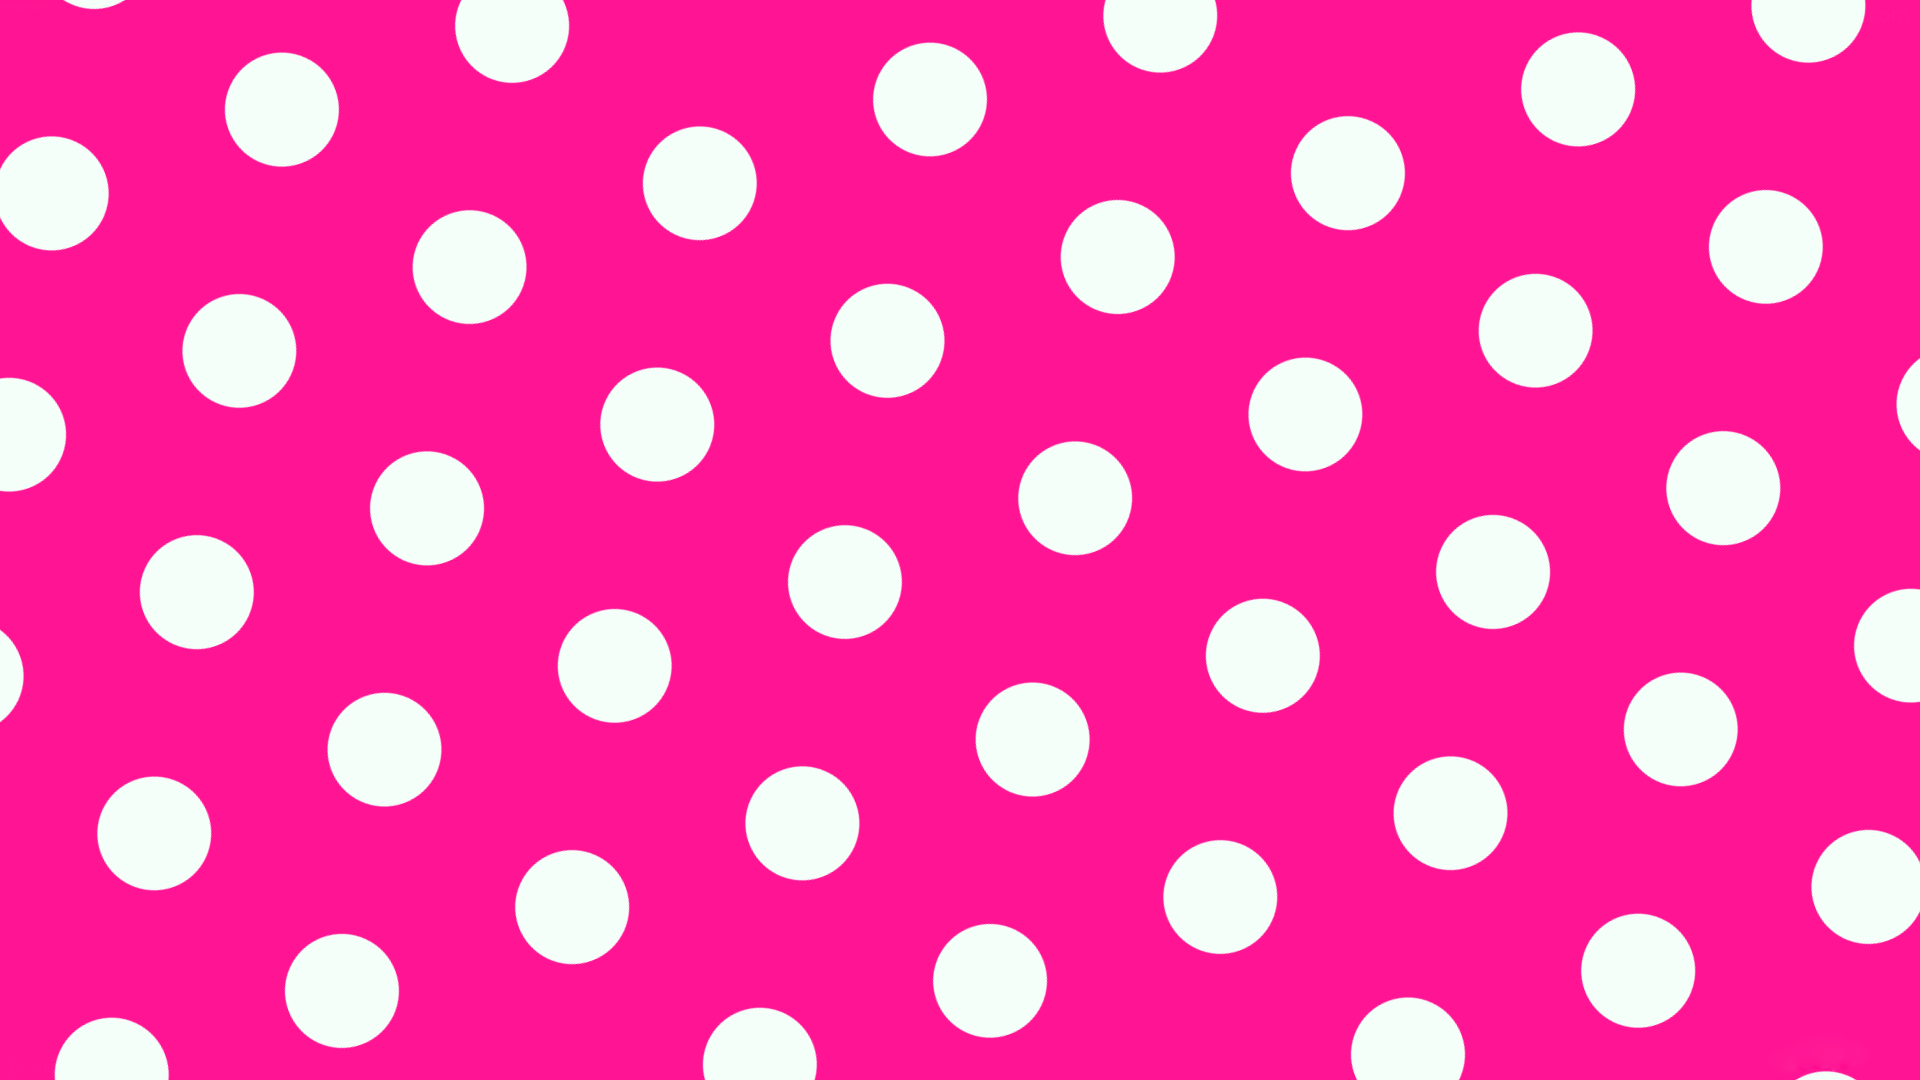 3. Pink and White Polka Dot Nail Art for Short Nails - wide 3